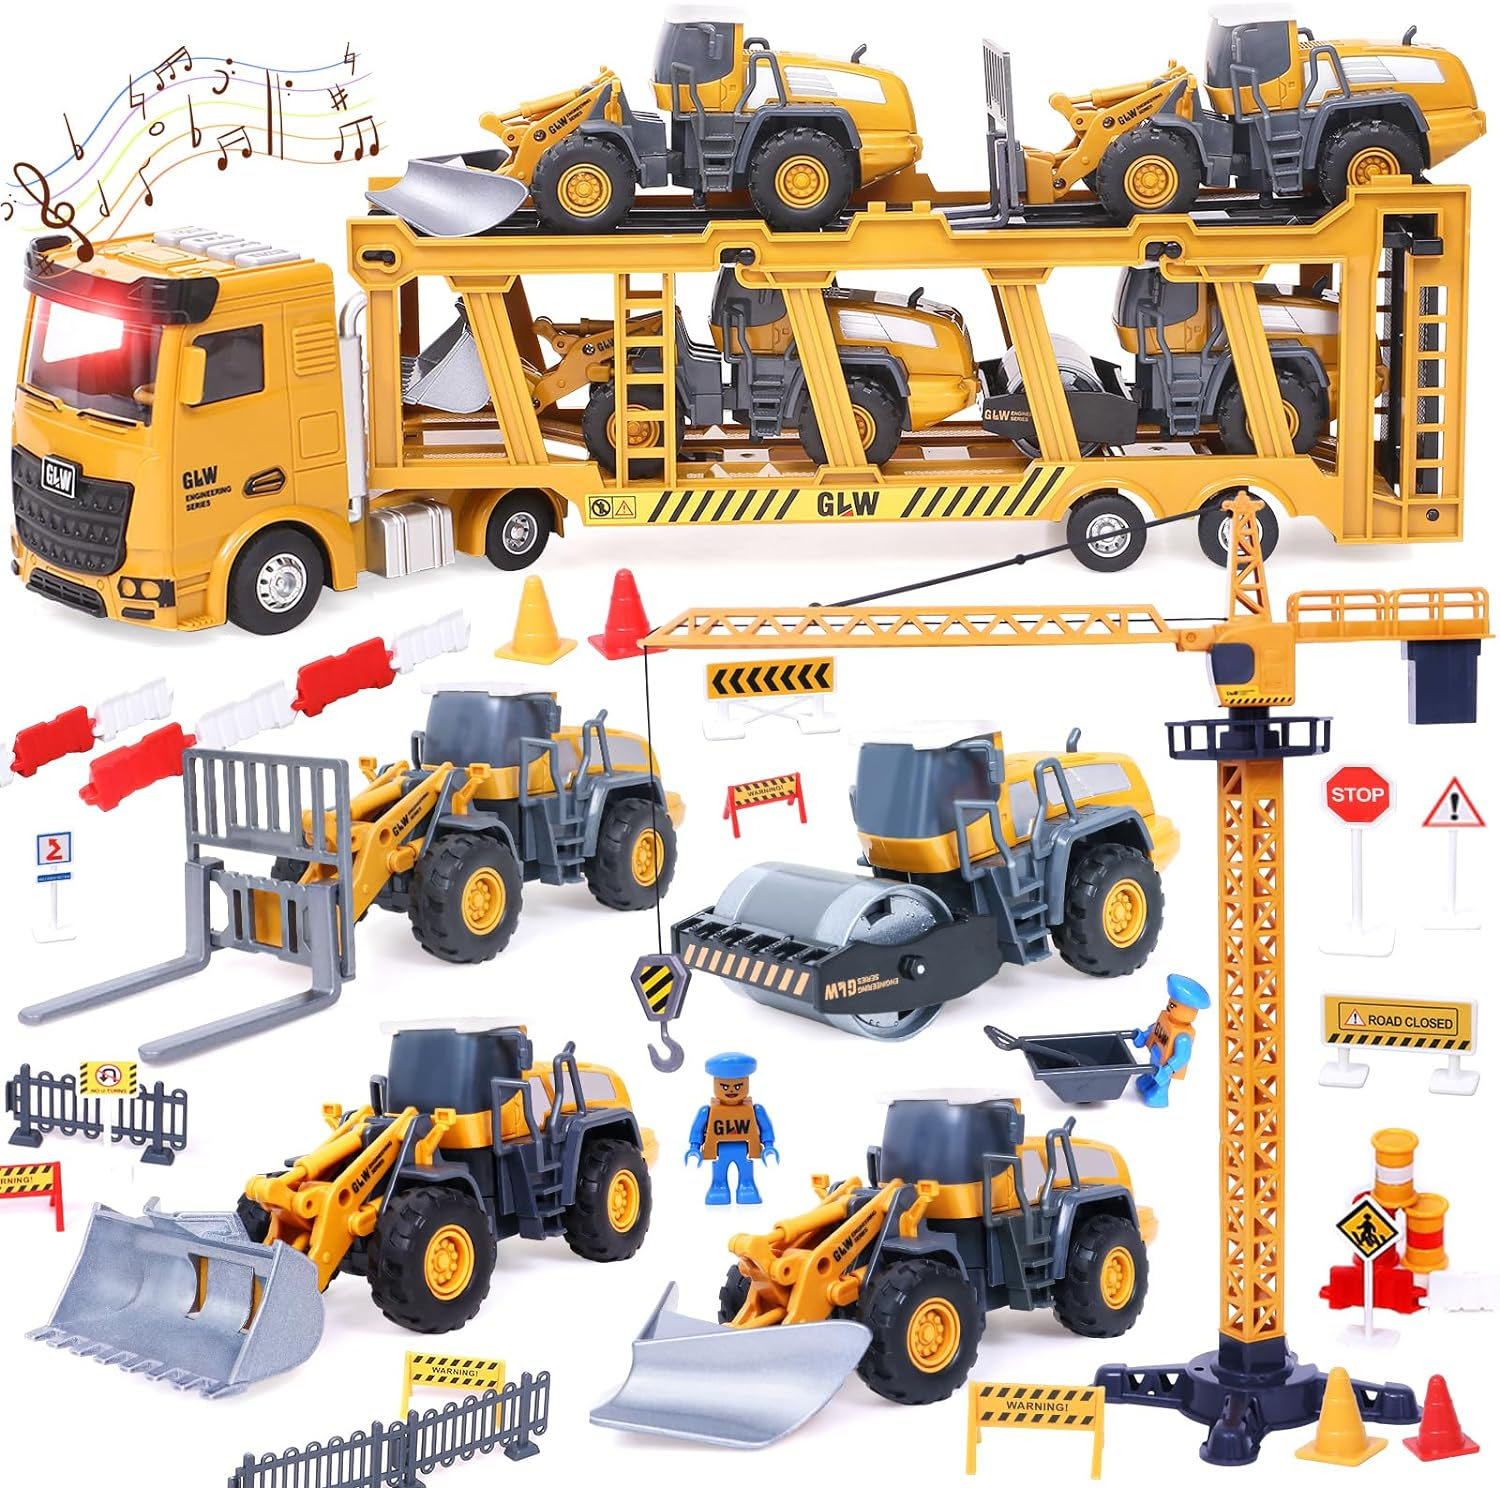 Construction Truck Toy. 300 units.  EXW Los Angeles $14.50 unit.